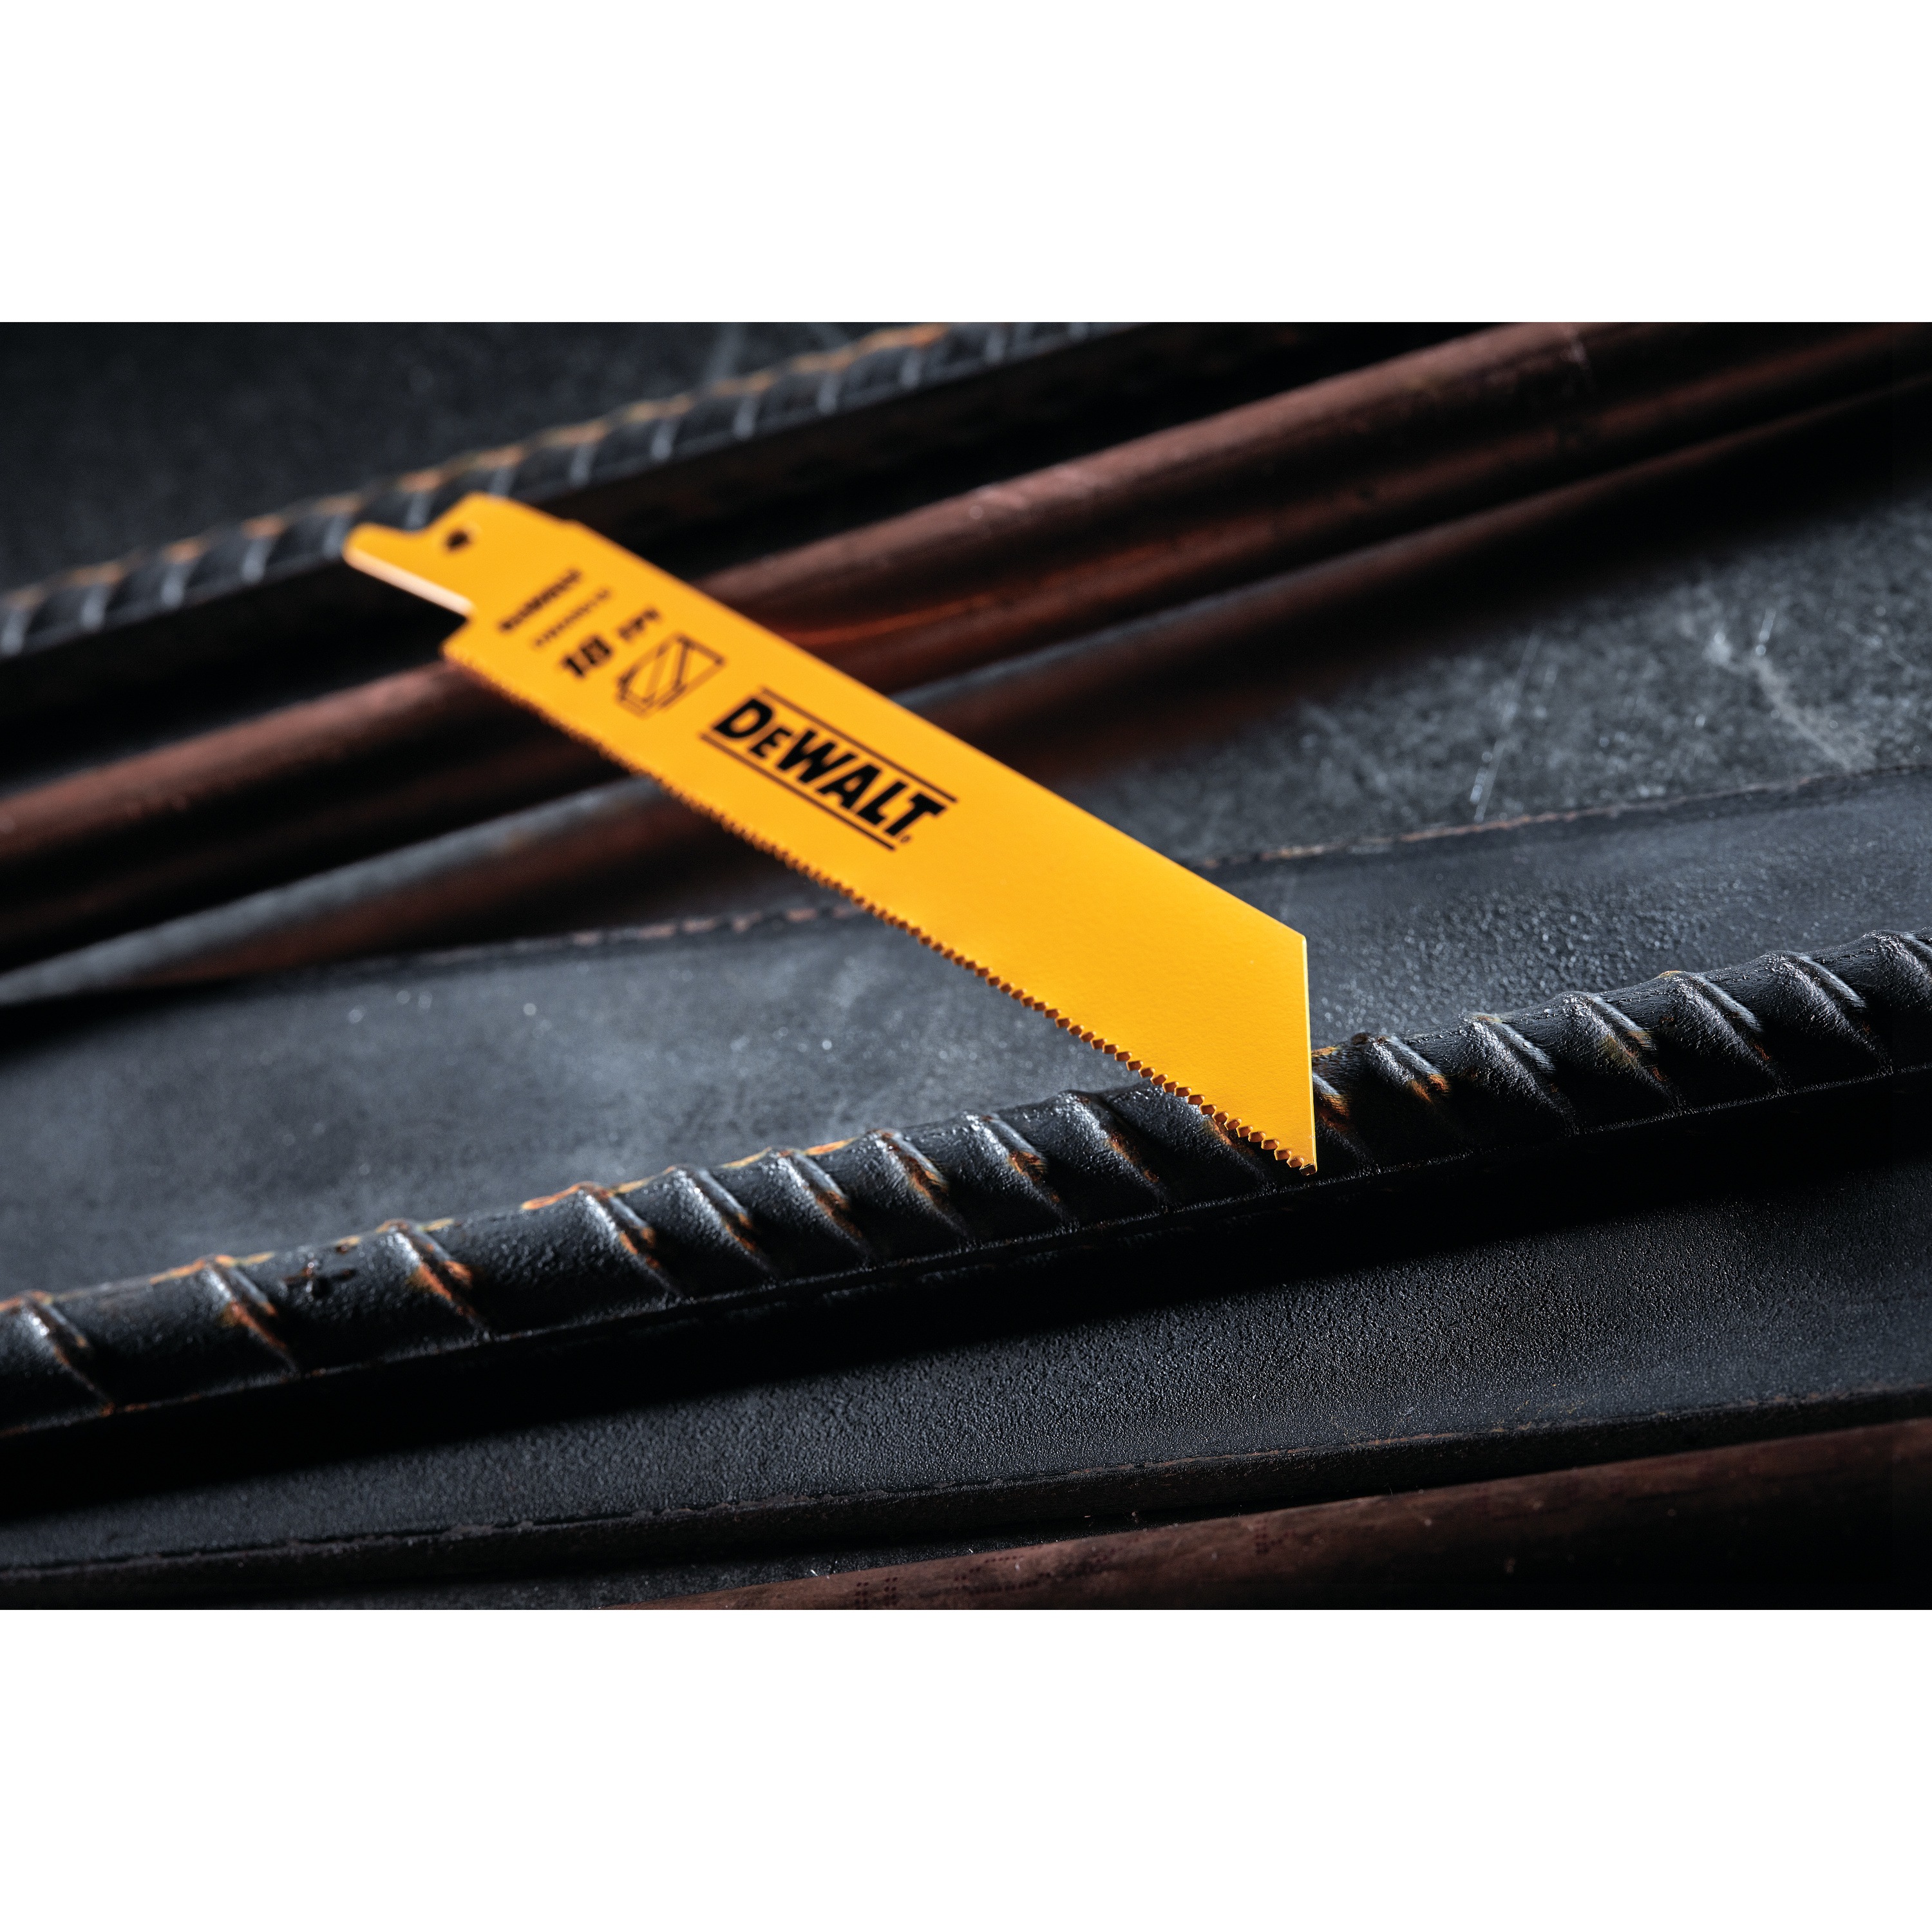 Long lasting cutting edge feature of metal cutting bi metal reciprocating saw blades.